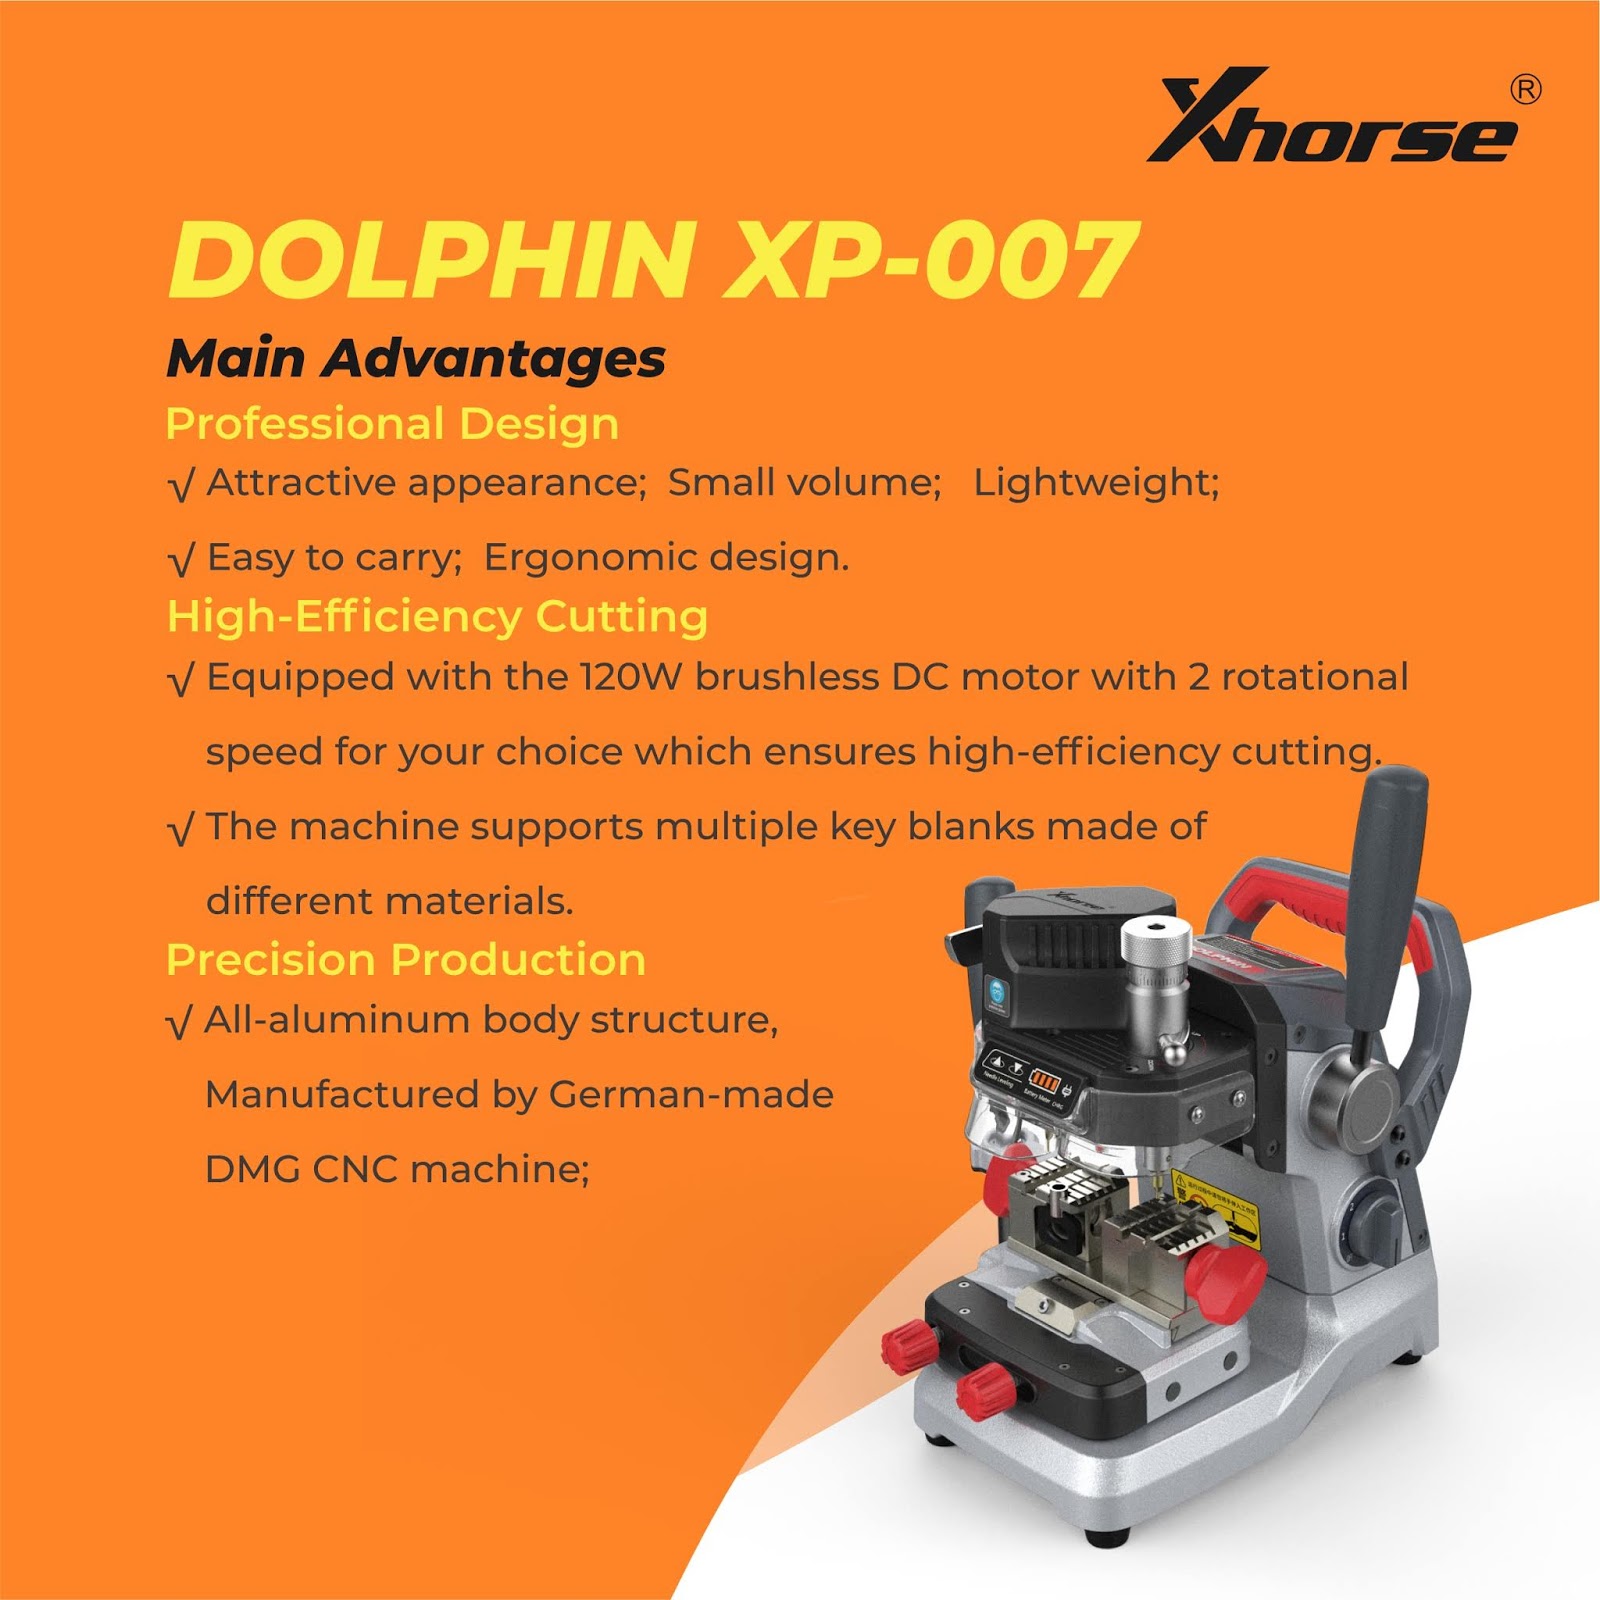 Dolphin XP-700 Advantages